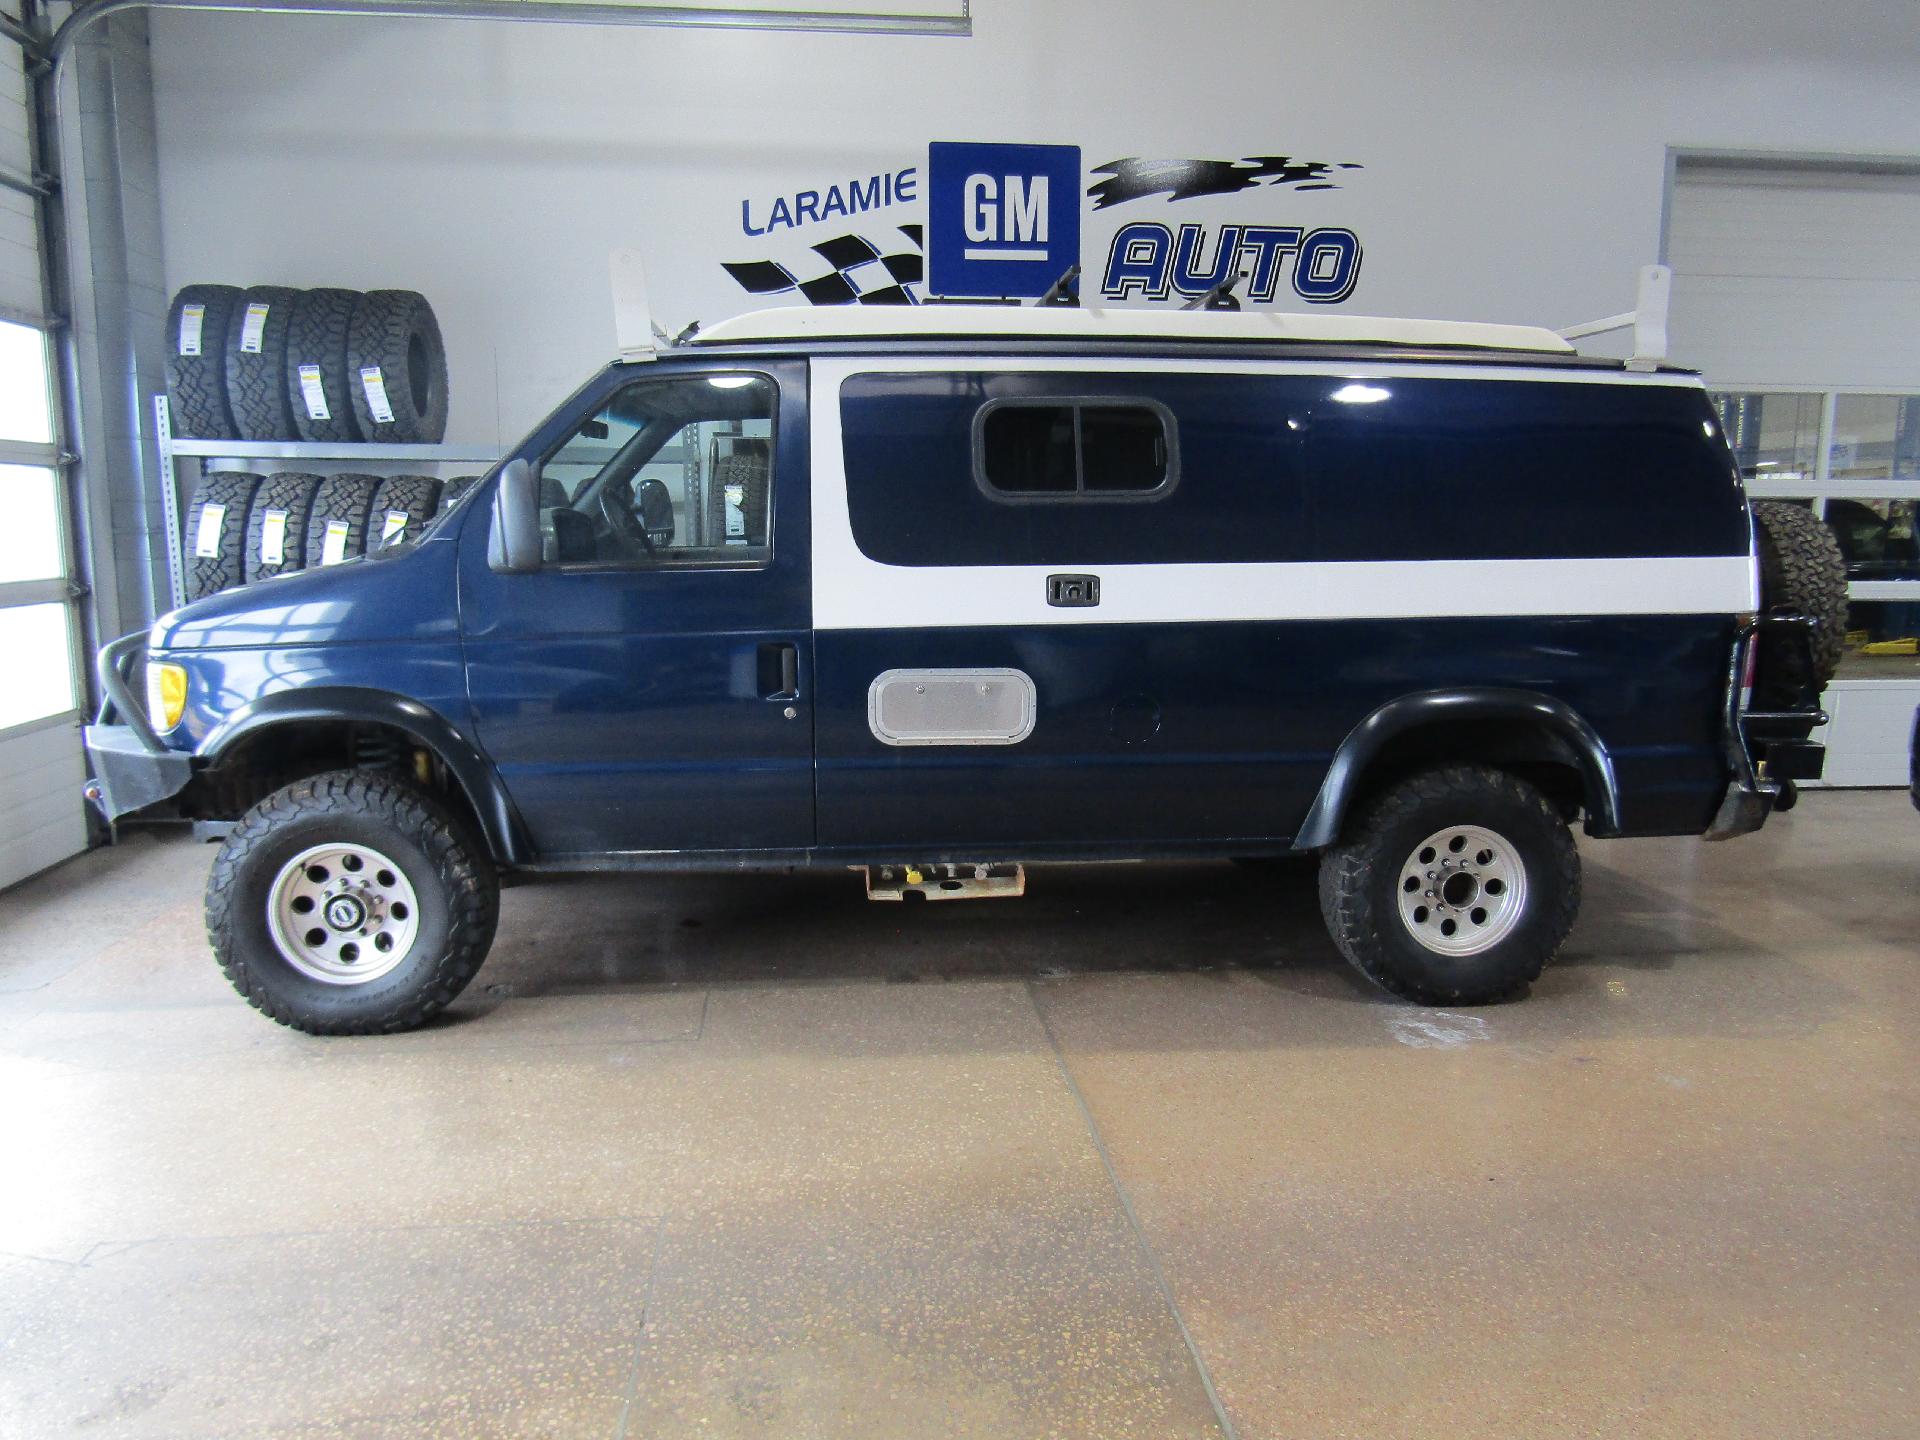 Laramie Ford Econoline Cargo Van Used For Sale 3912p